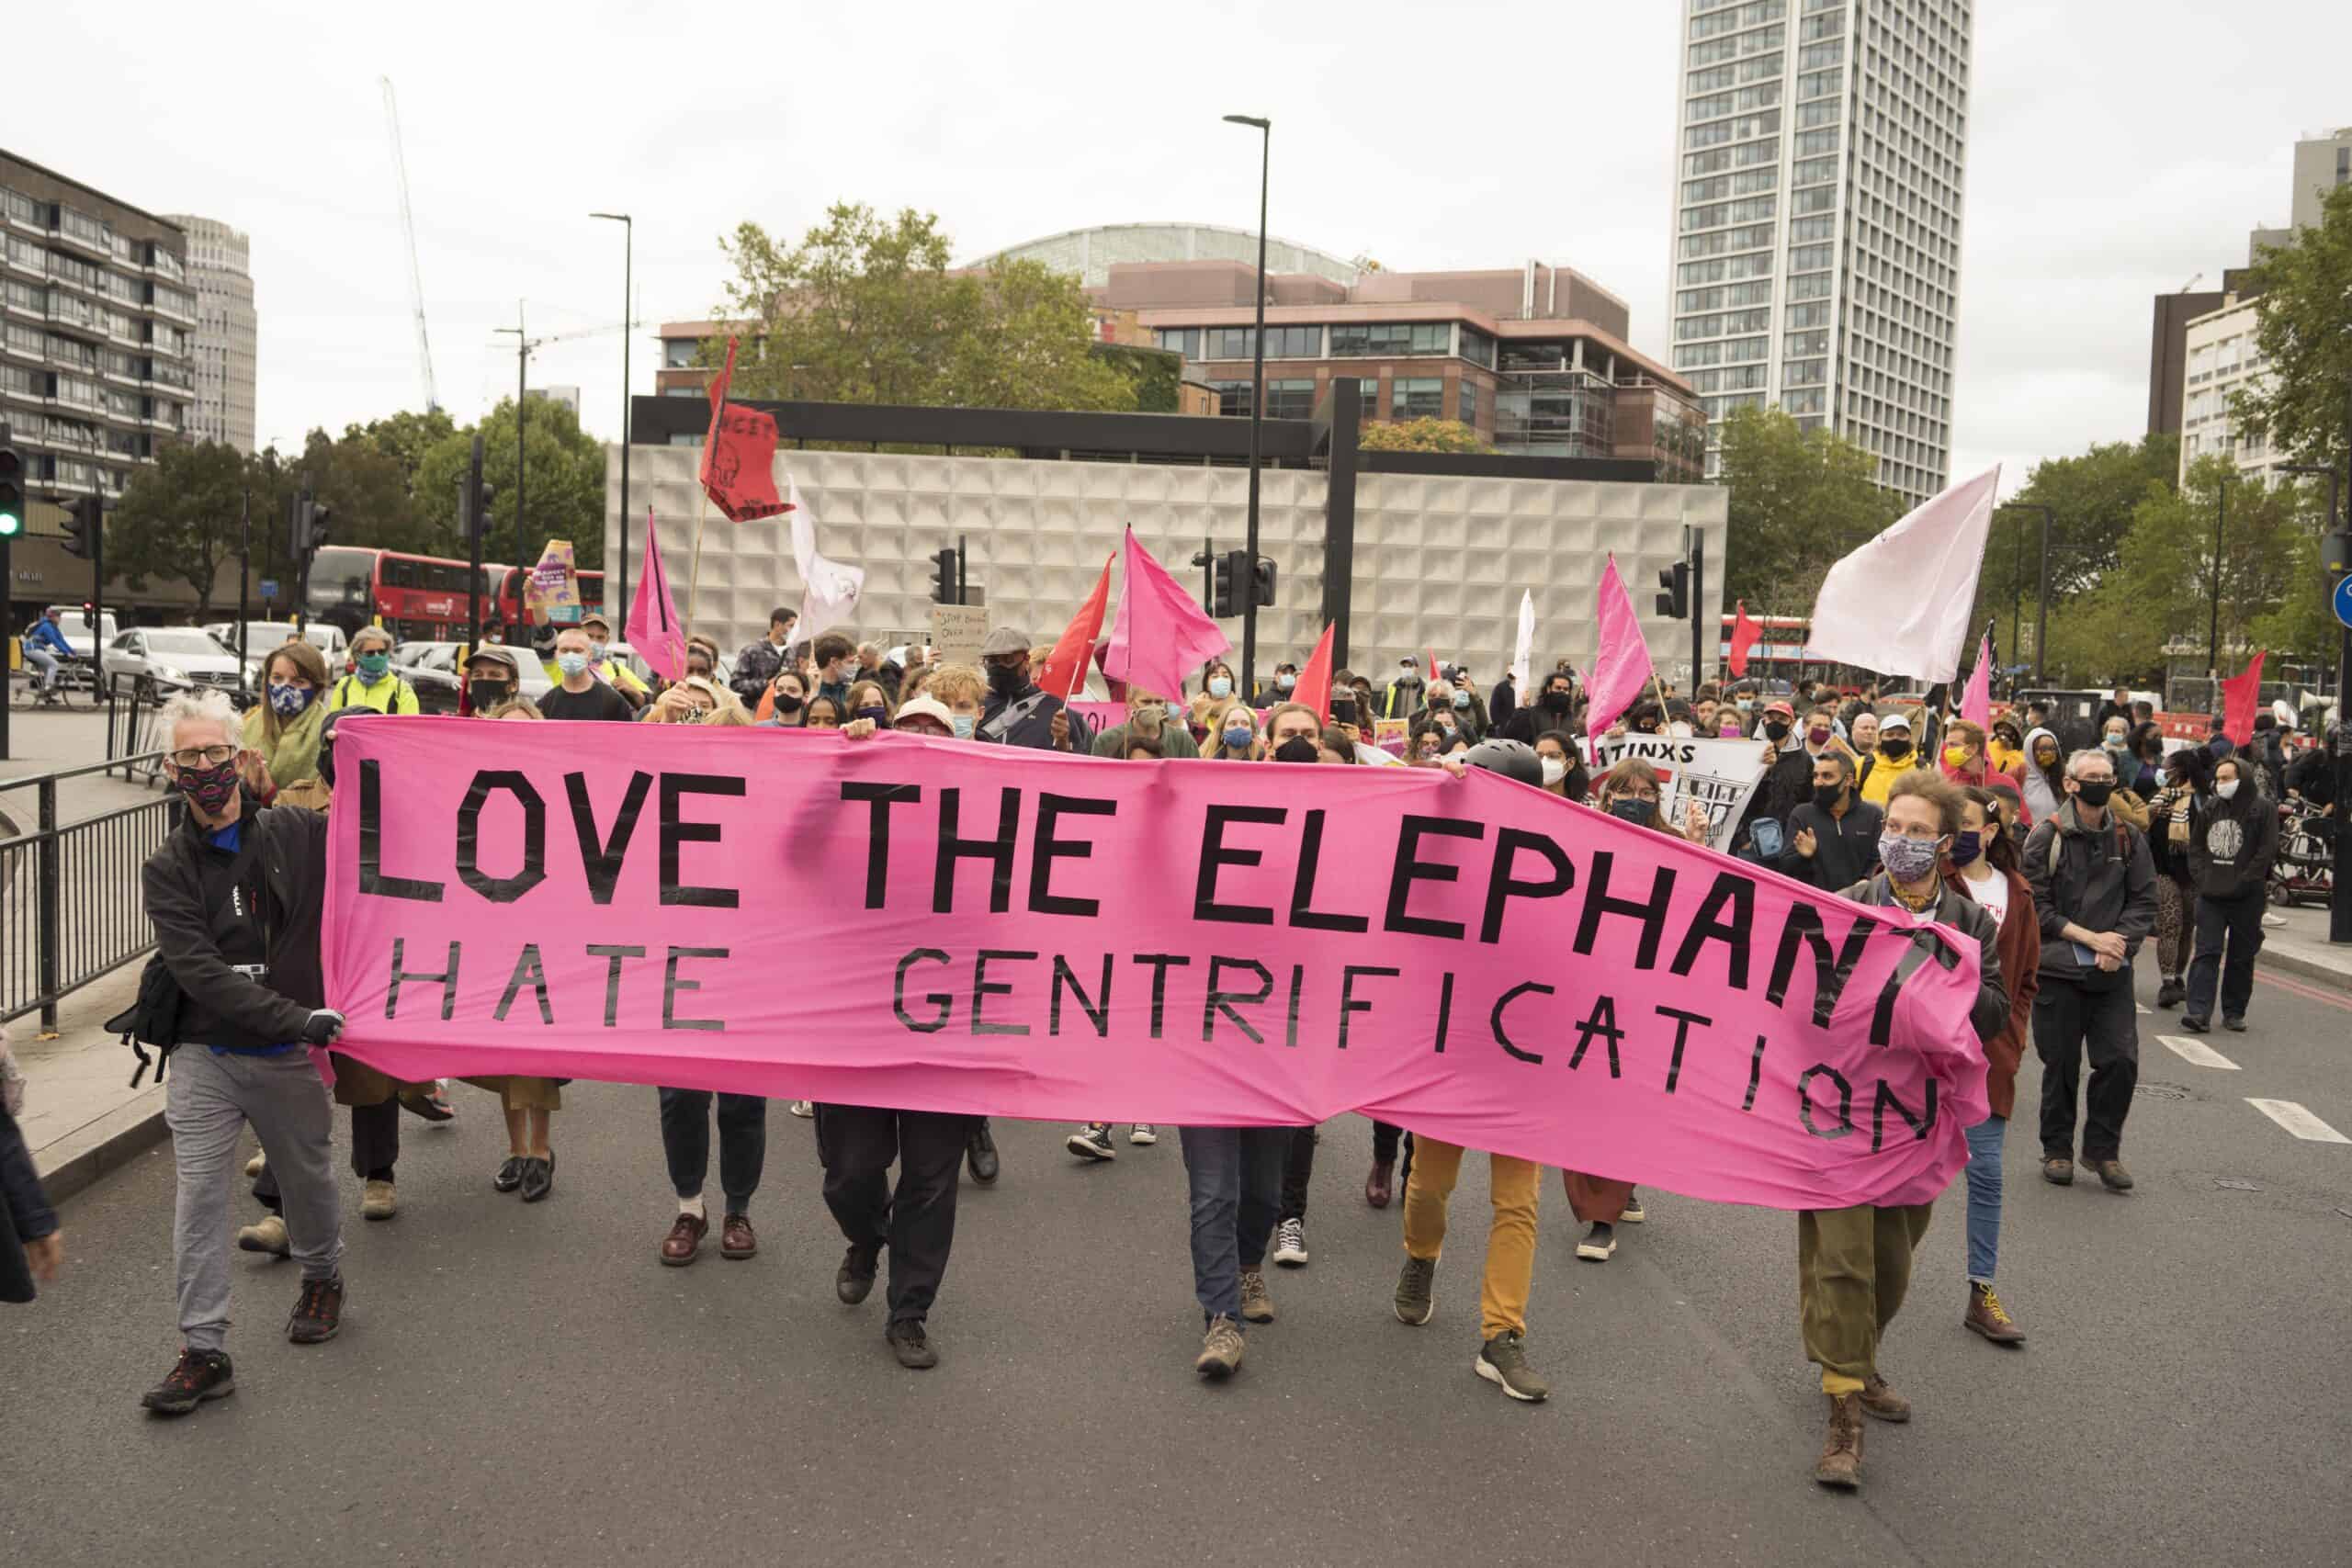 Marchers carry a 'Love the Elephant, hate gentrification' banner (c) Sebastian Garraway